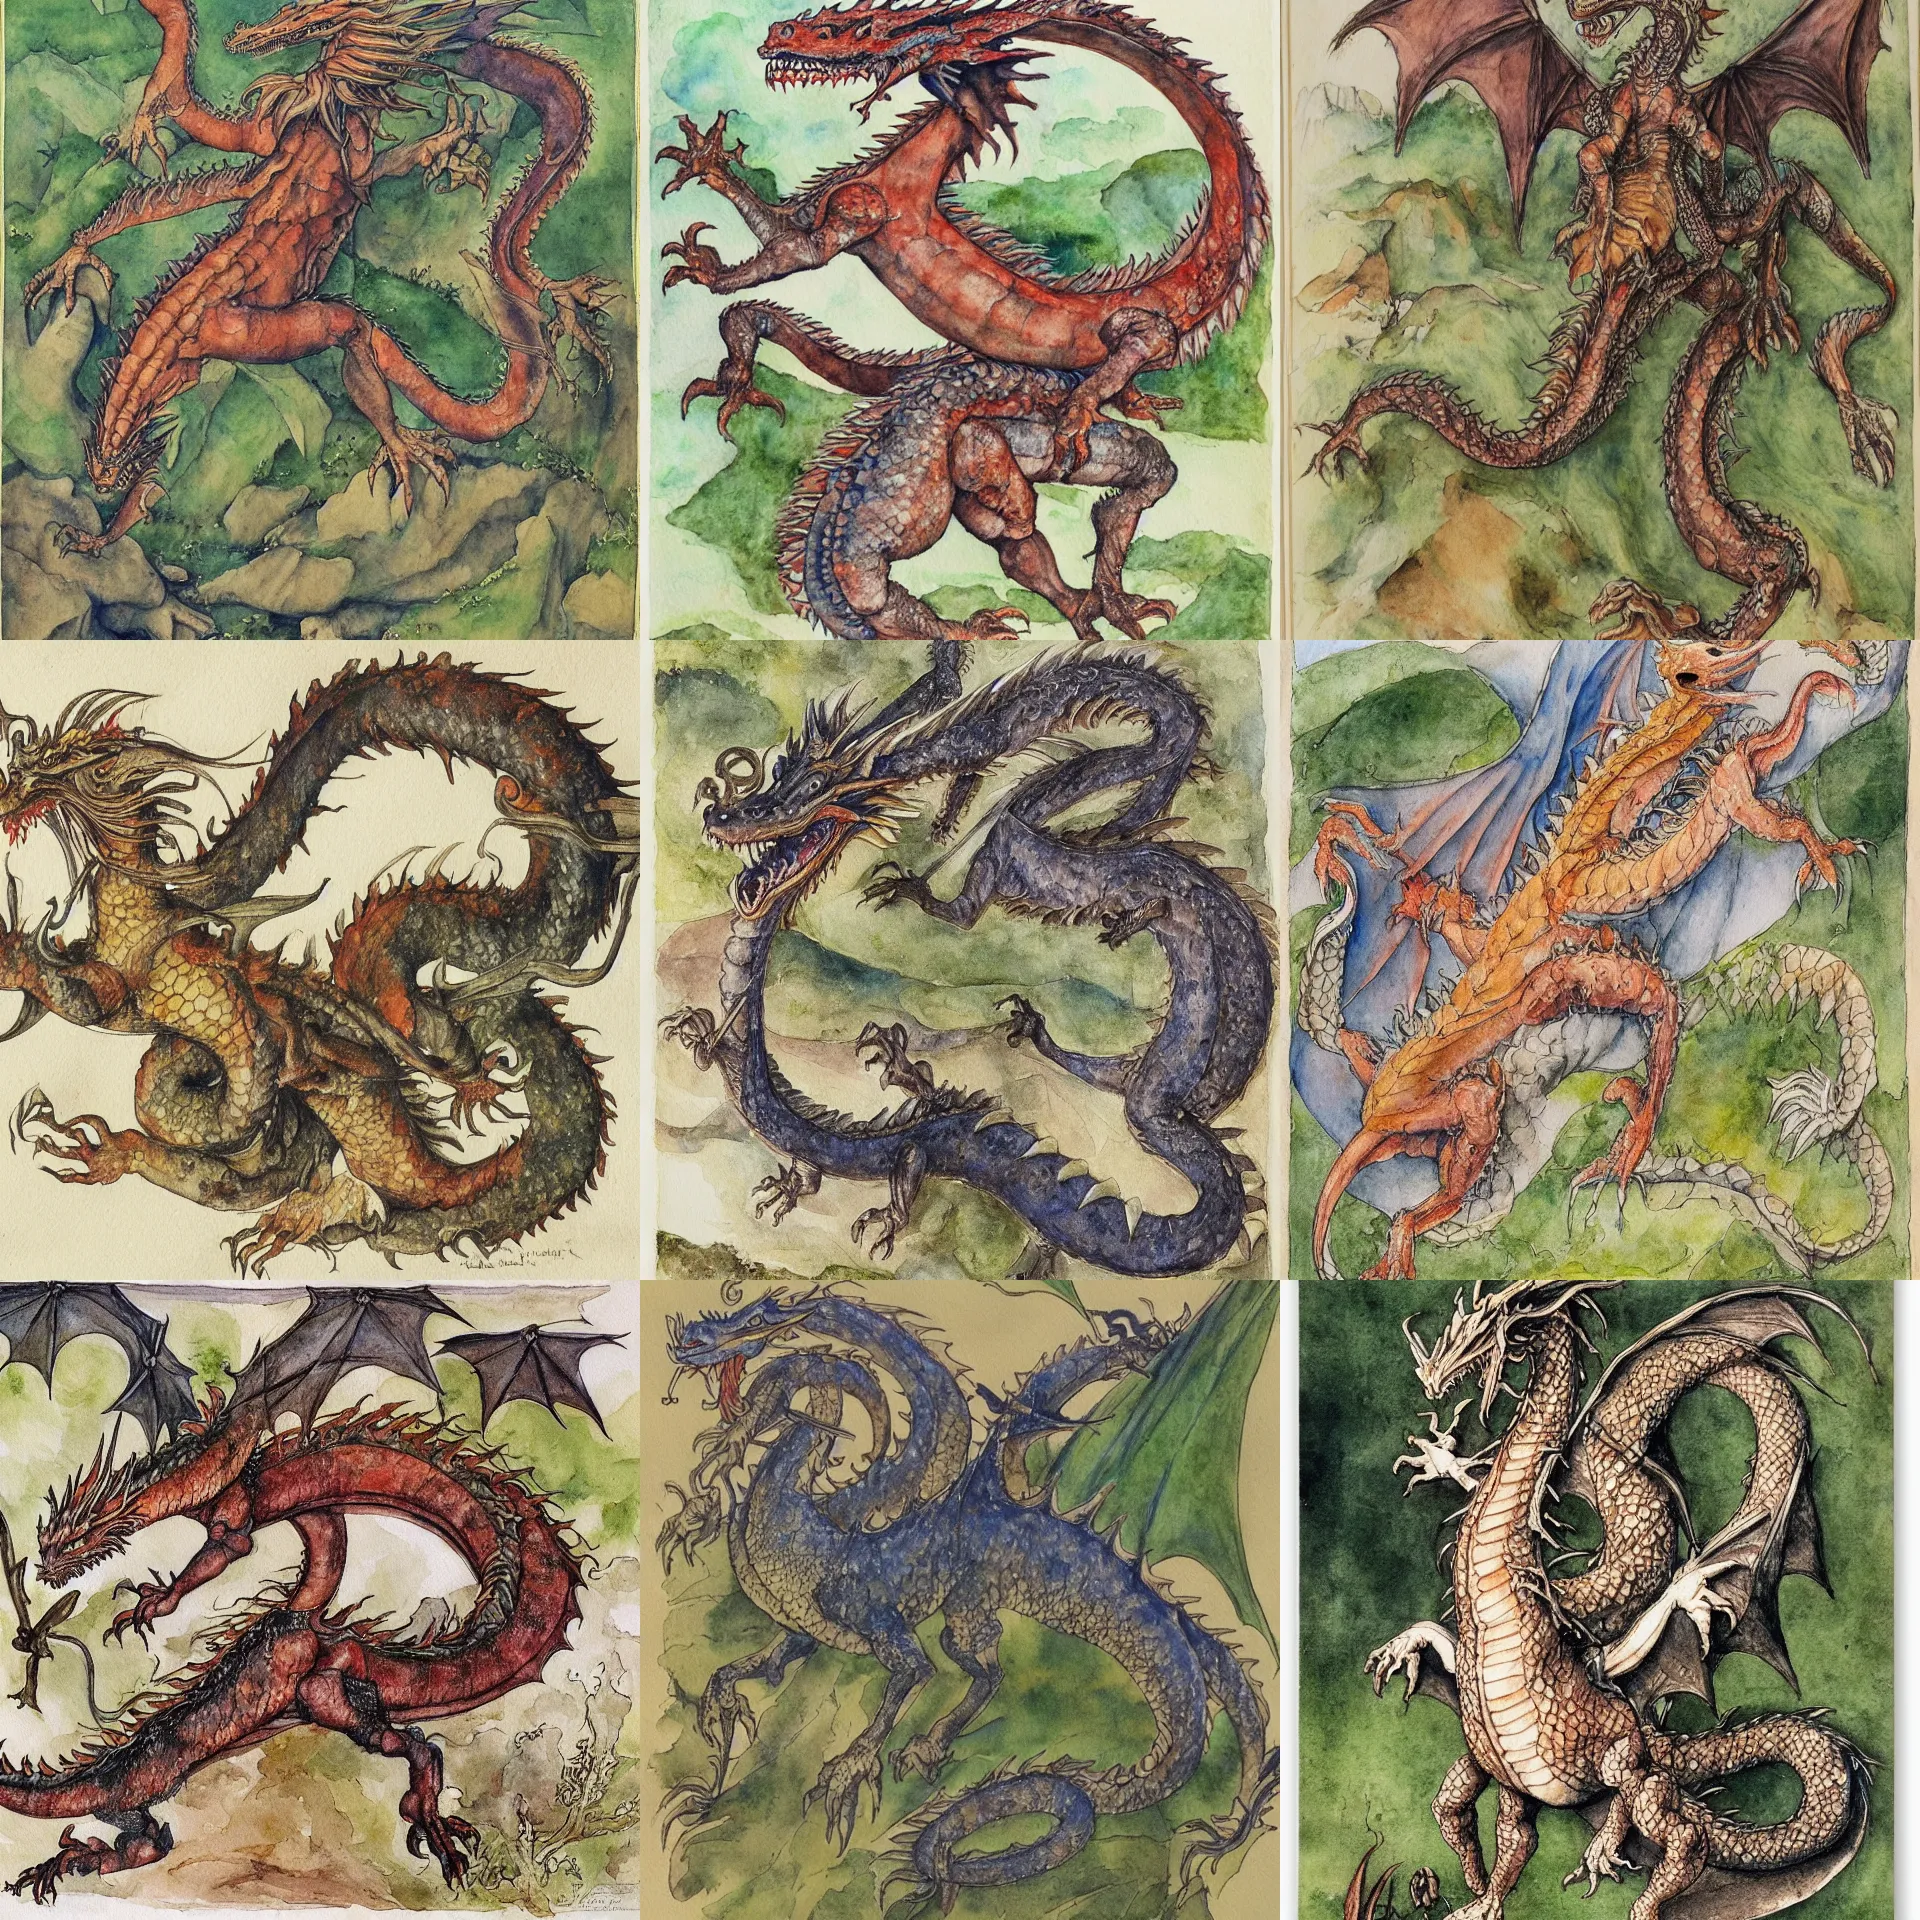 Prompt: a full body dragon by Albrecht Dürer, nature study, watercolor